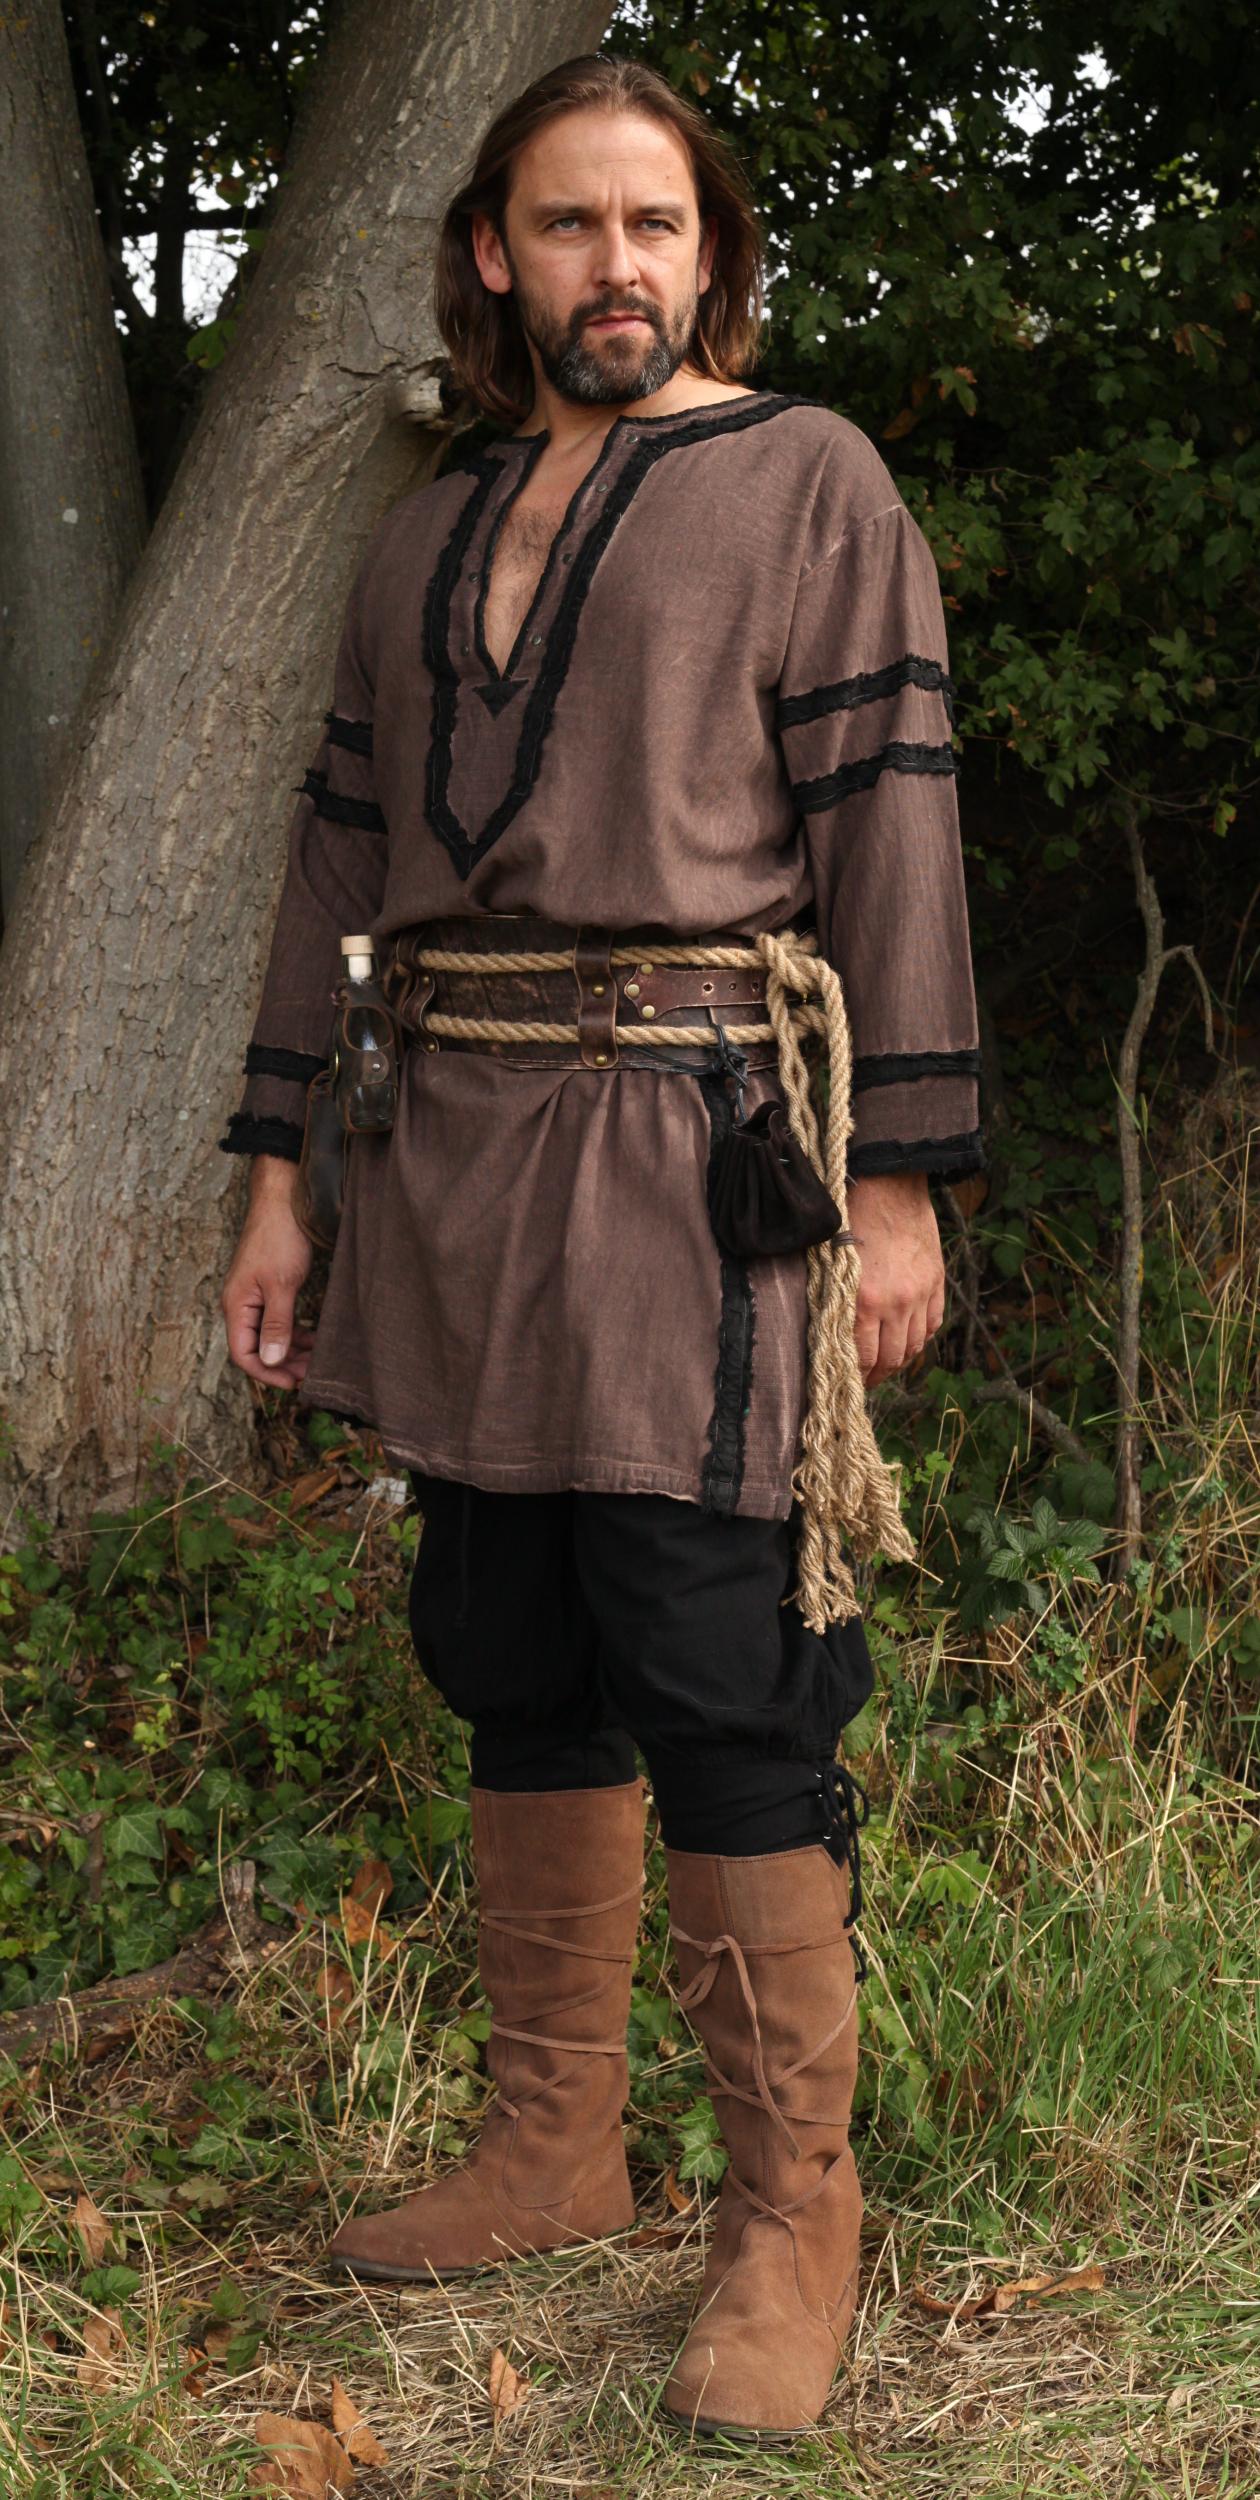 Costume Viking Rollo commander en ligne chez